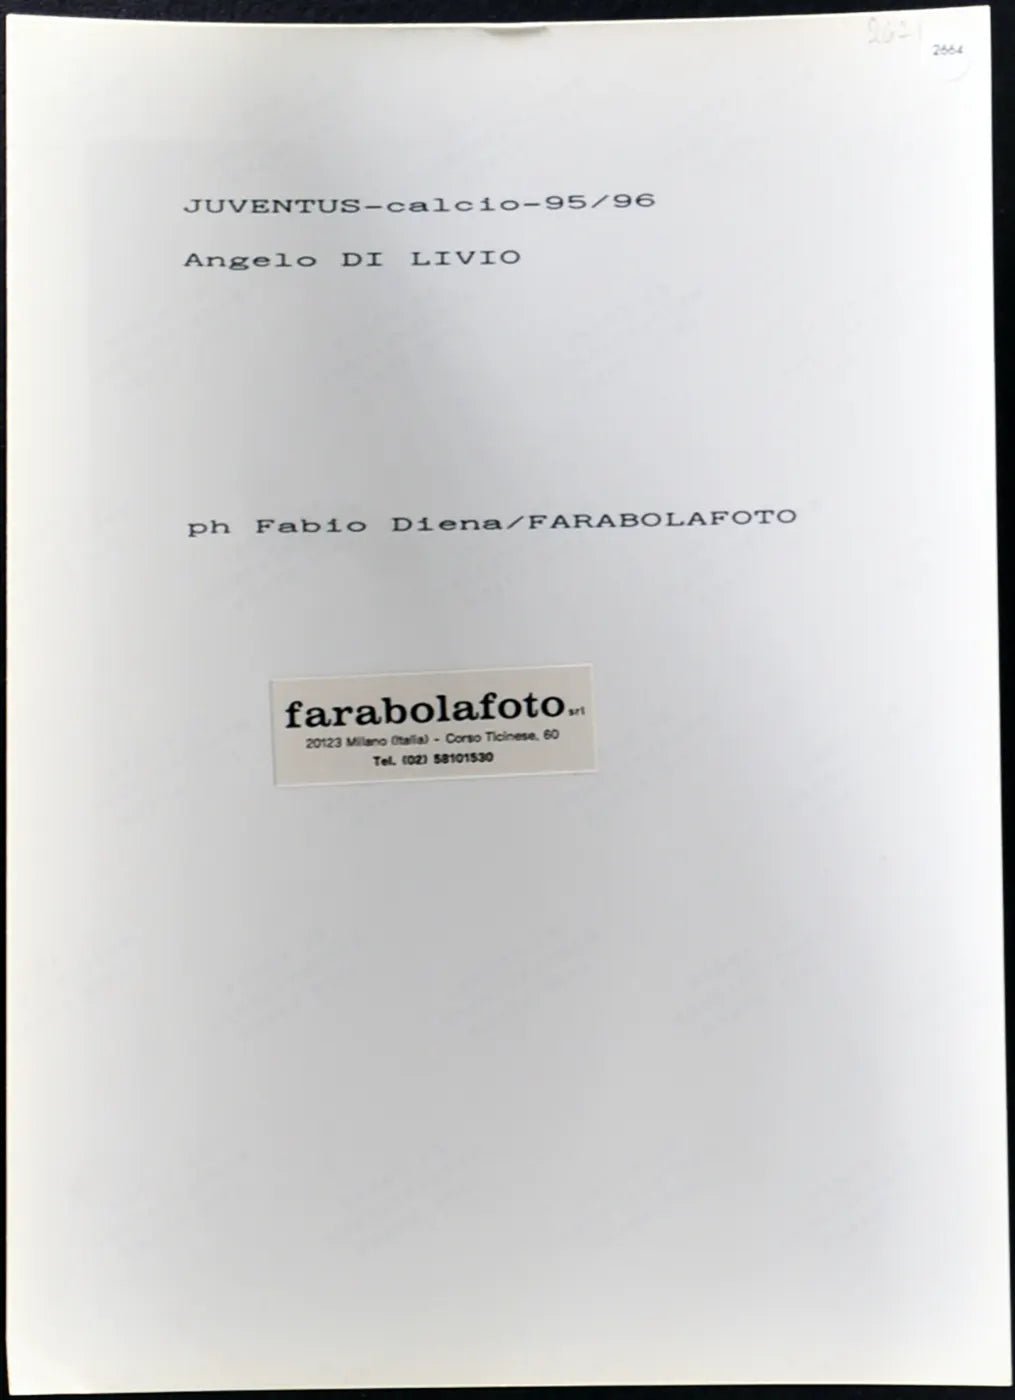 Di Livio Juventus 1995-1996 Ft 2664 - Stampa 24x18 cm - Farabola Stampa ai sali d'argento